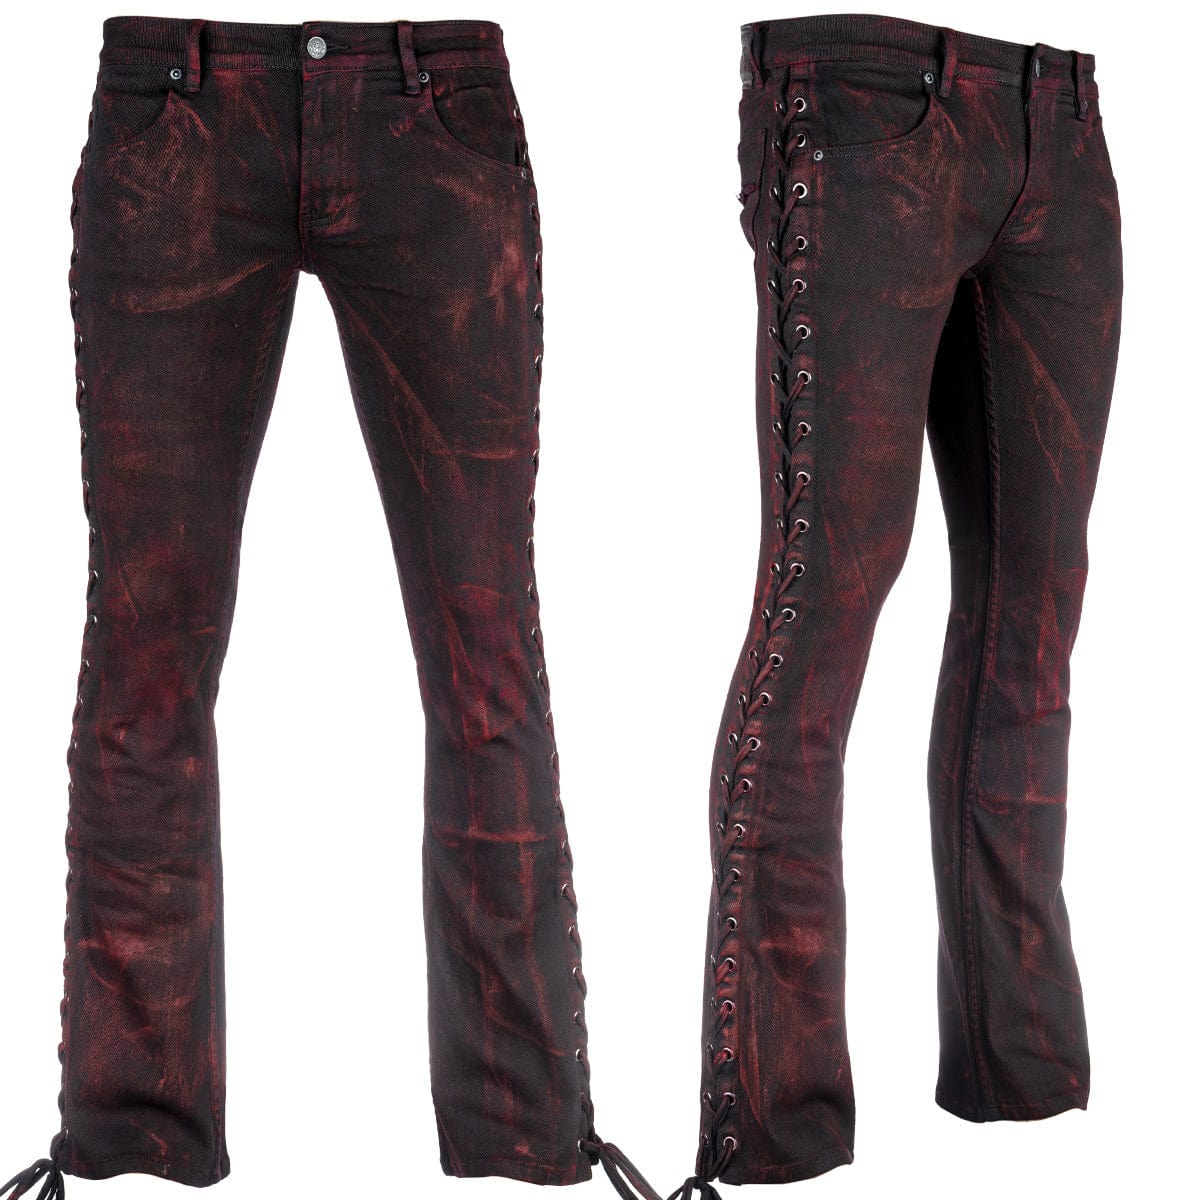 Custom Chop Shop Pants Wornstar Custom Jeans - Black Cherry Bomb Alloy Washed Side Laced